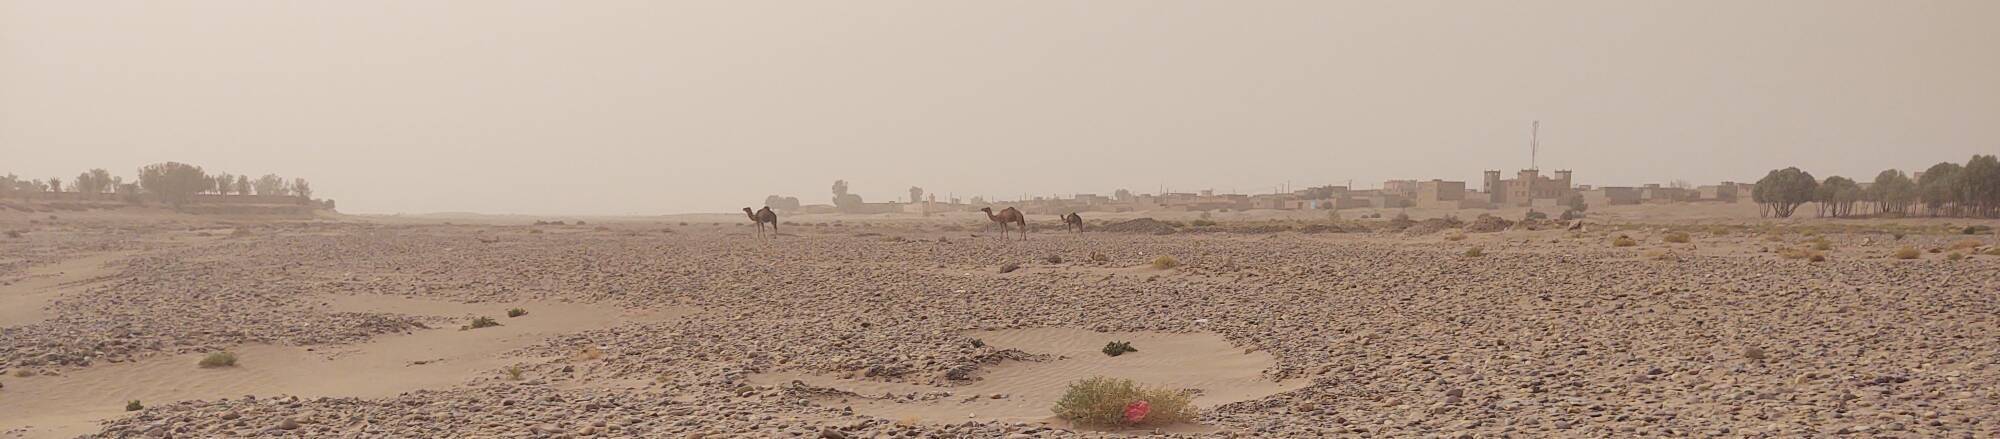 Camels in the Draa wadi at M'Hamid el Ghizlane, Morocco.